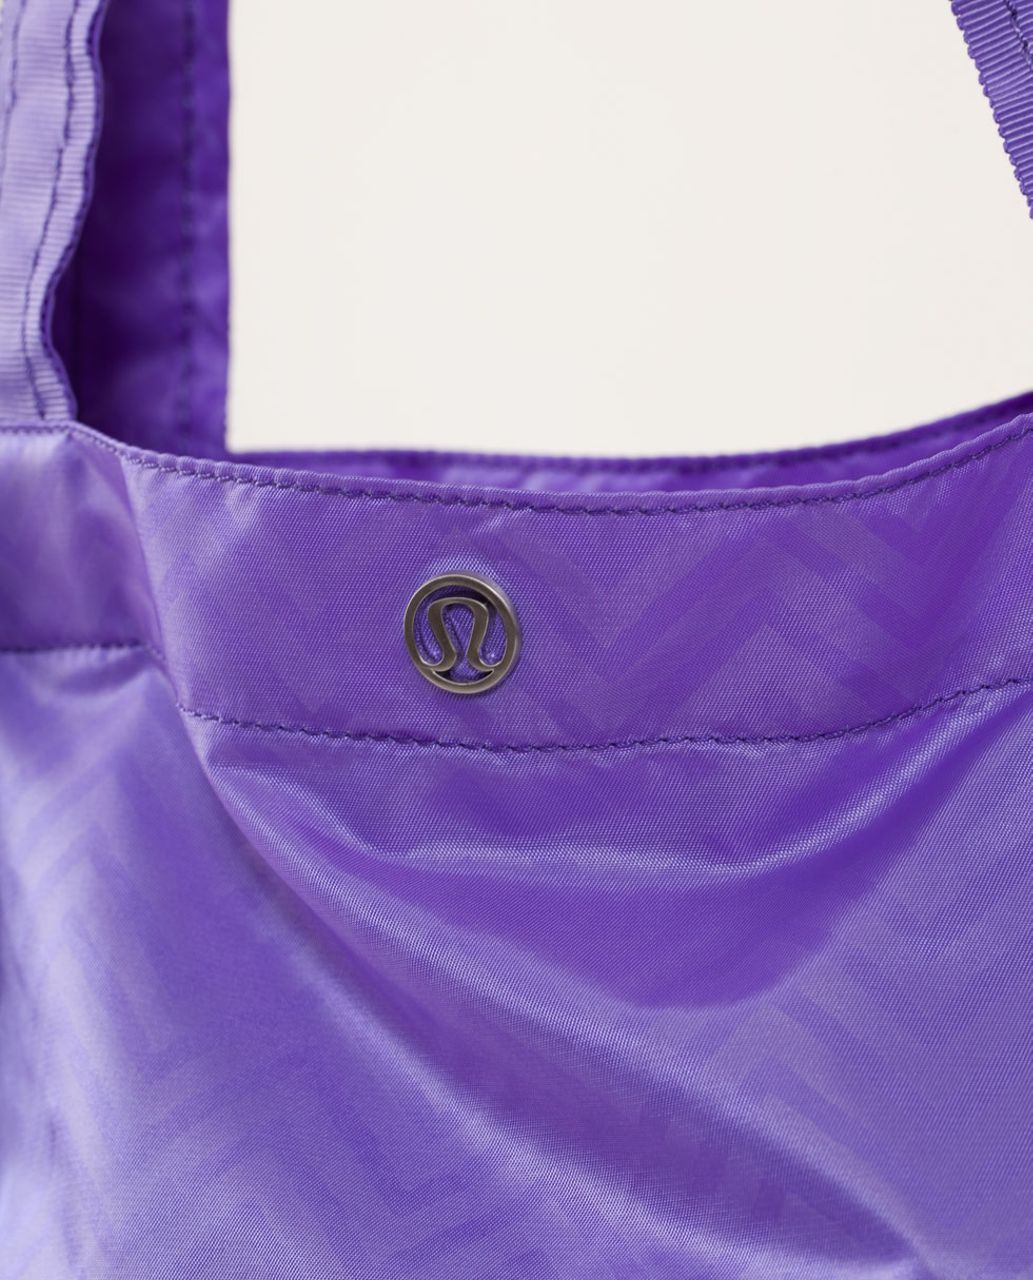 Lululemon Pack Your Practice Bag - Squiggle Emboss Power Purple